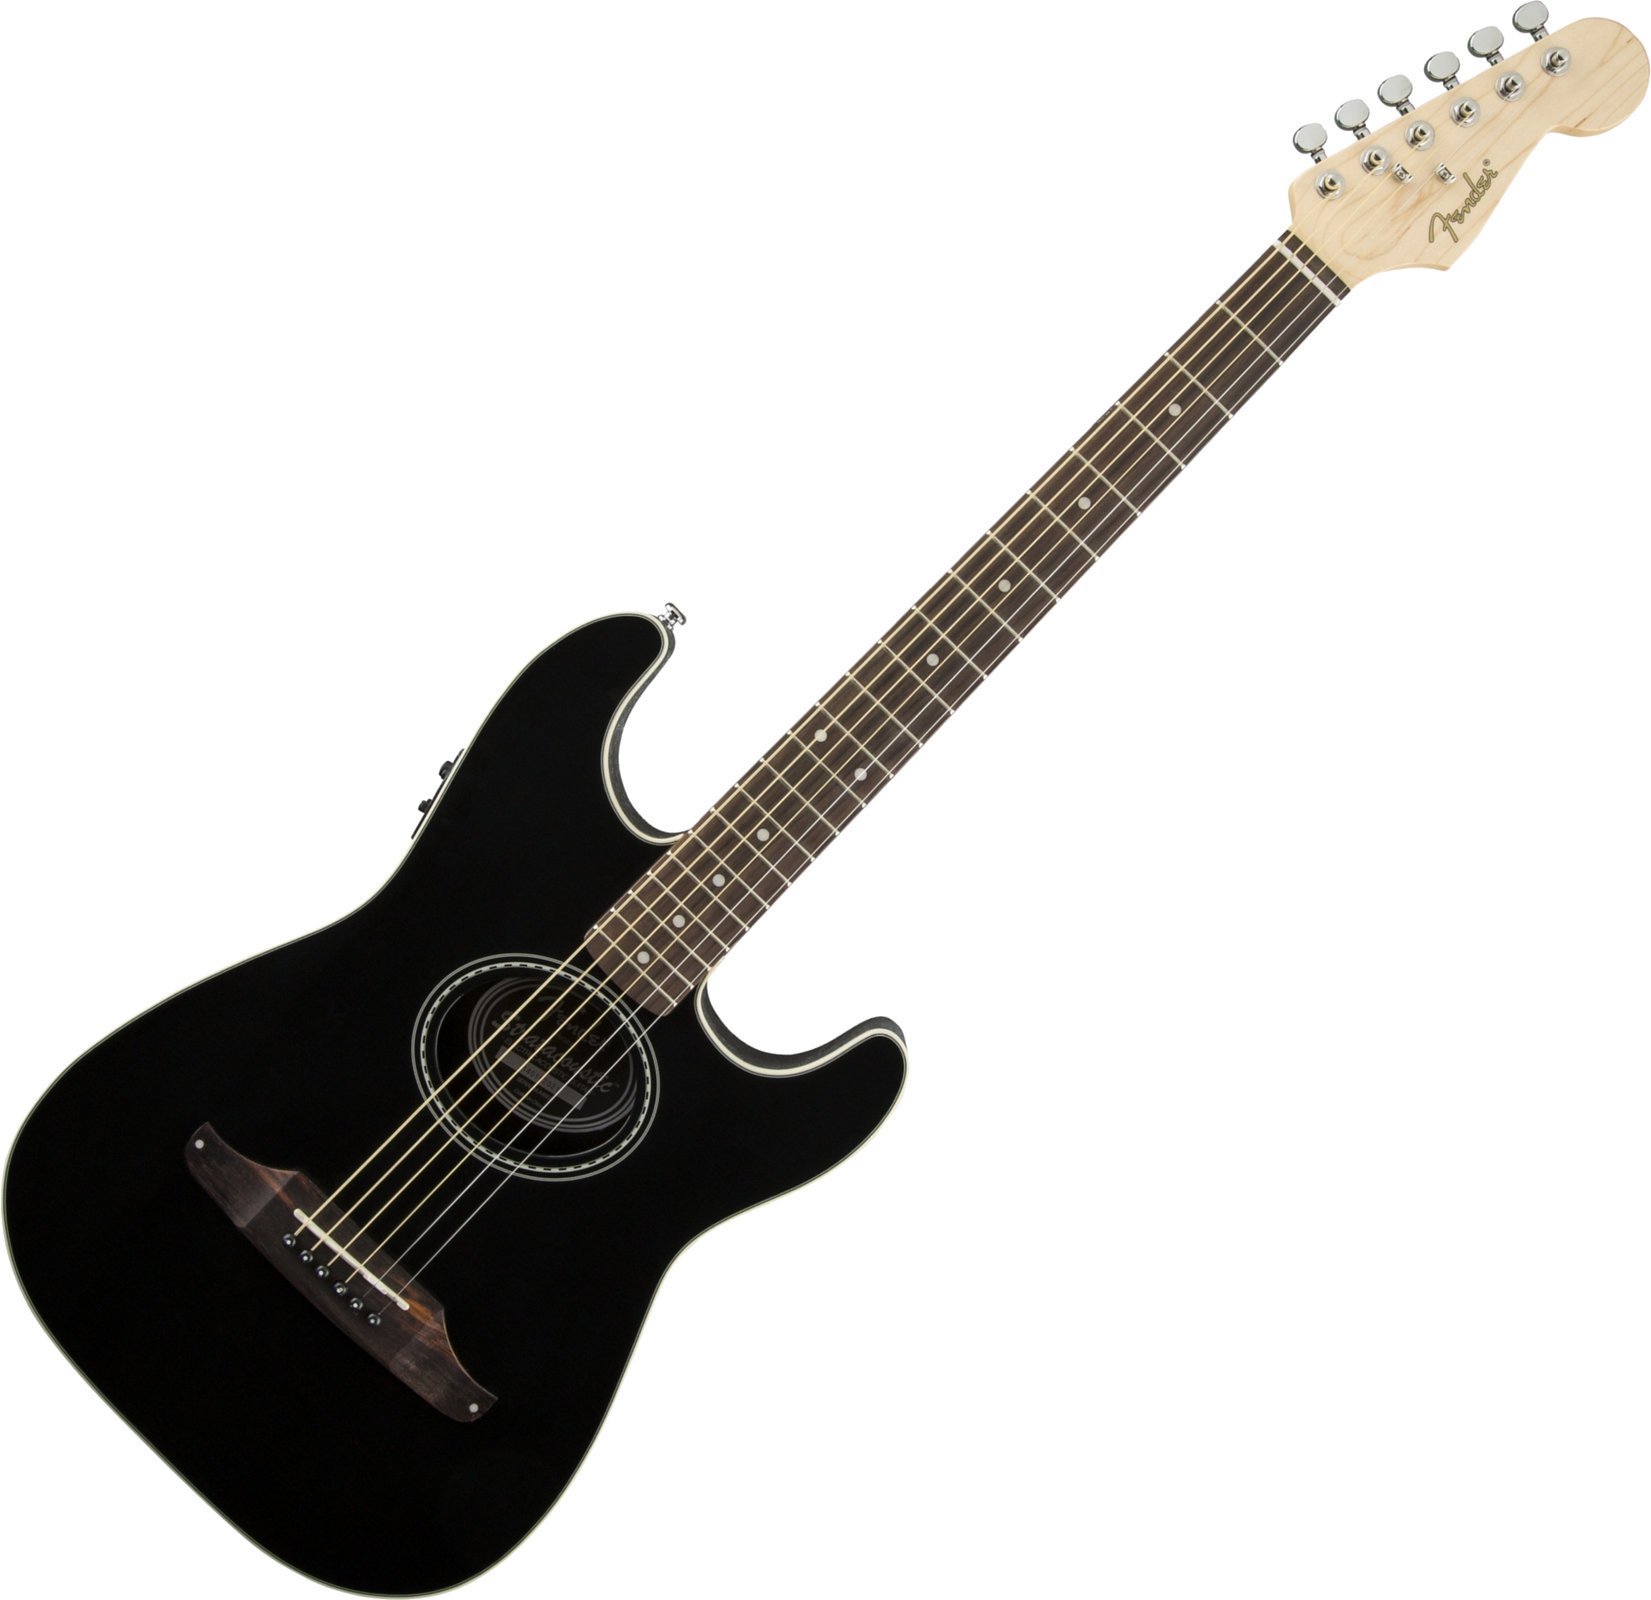 Electro-acoustic guitar Fender Stratacoustic Black